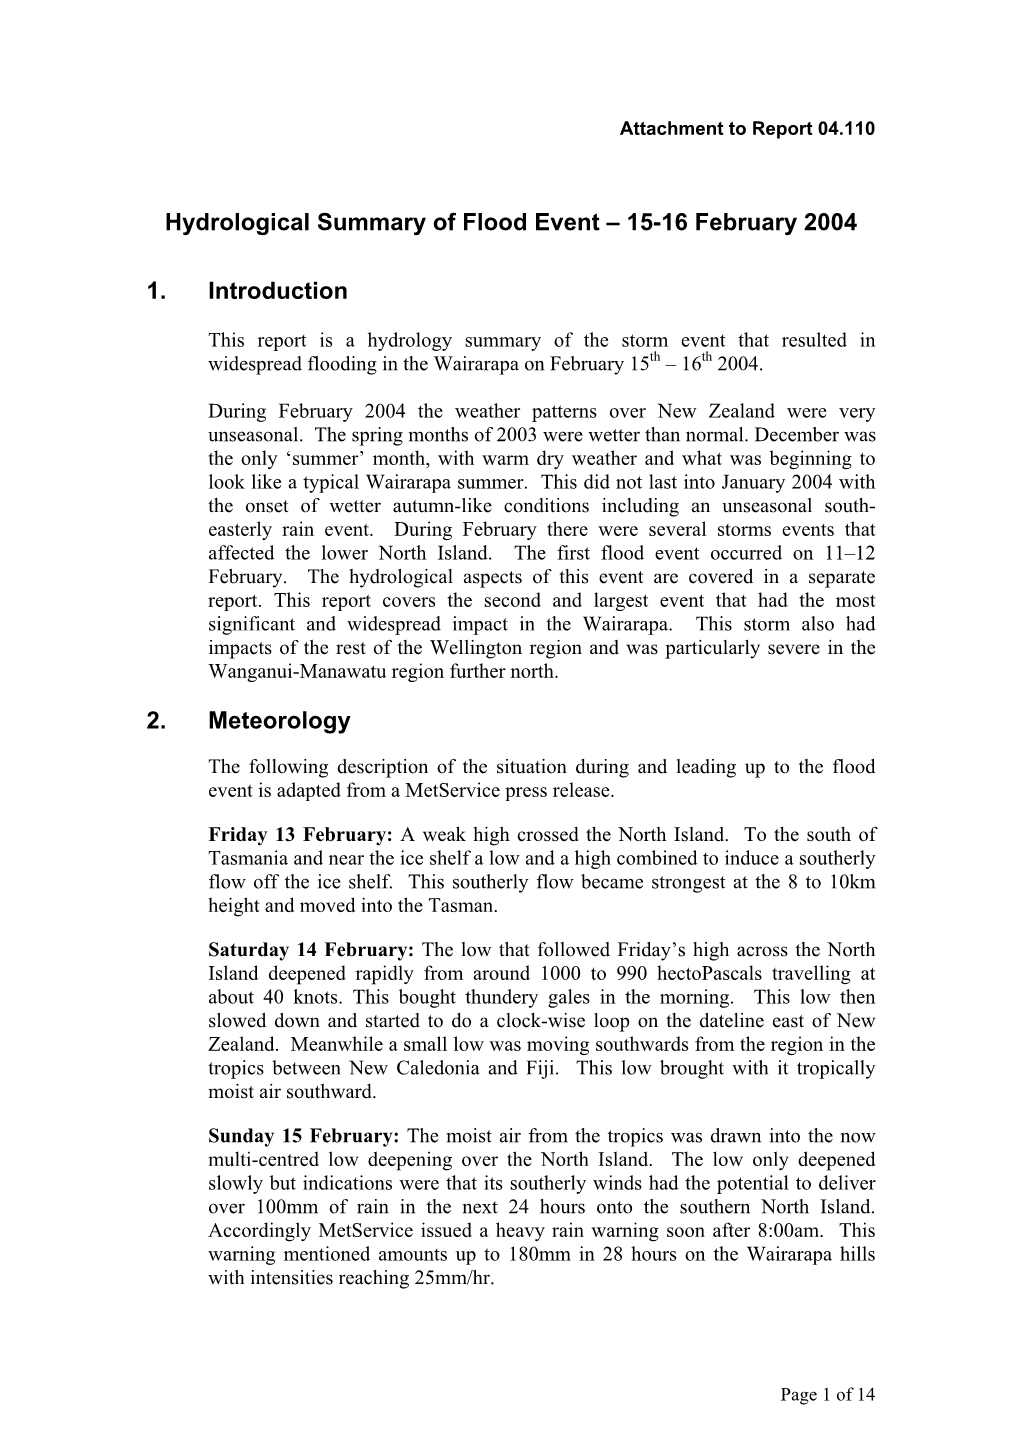 Hydrological Summary of Flood Event – 15-16 February 2004 1